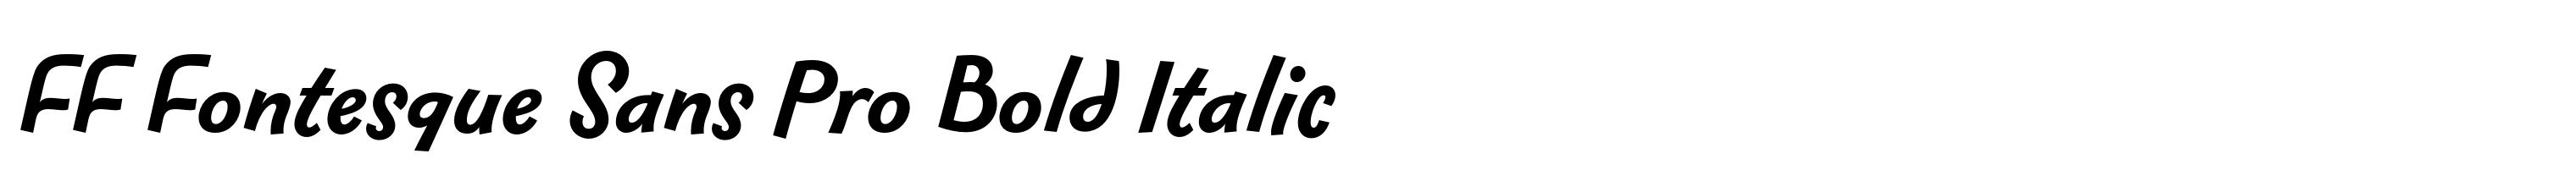 FF Fontesque Sans Pro Bold Italic